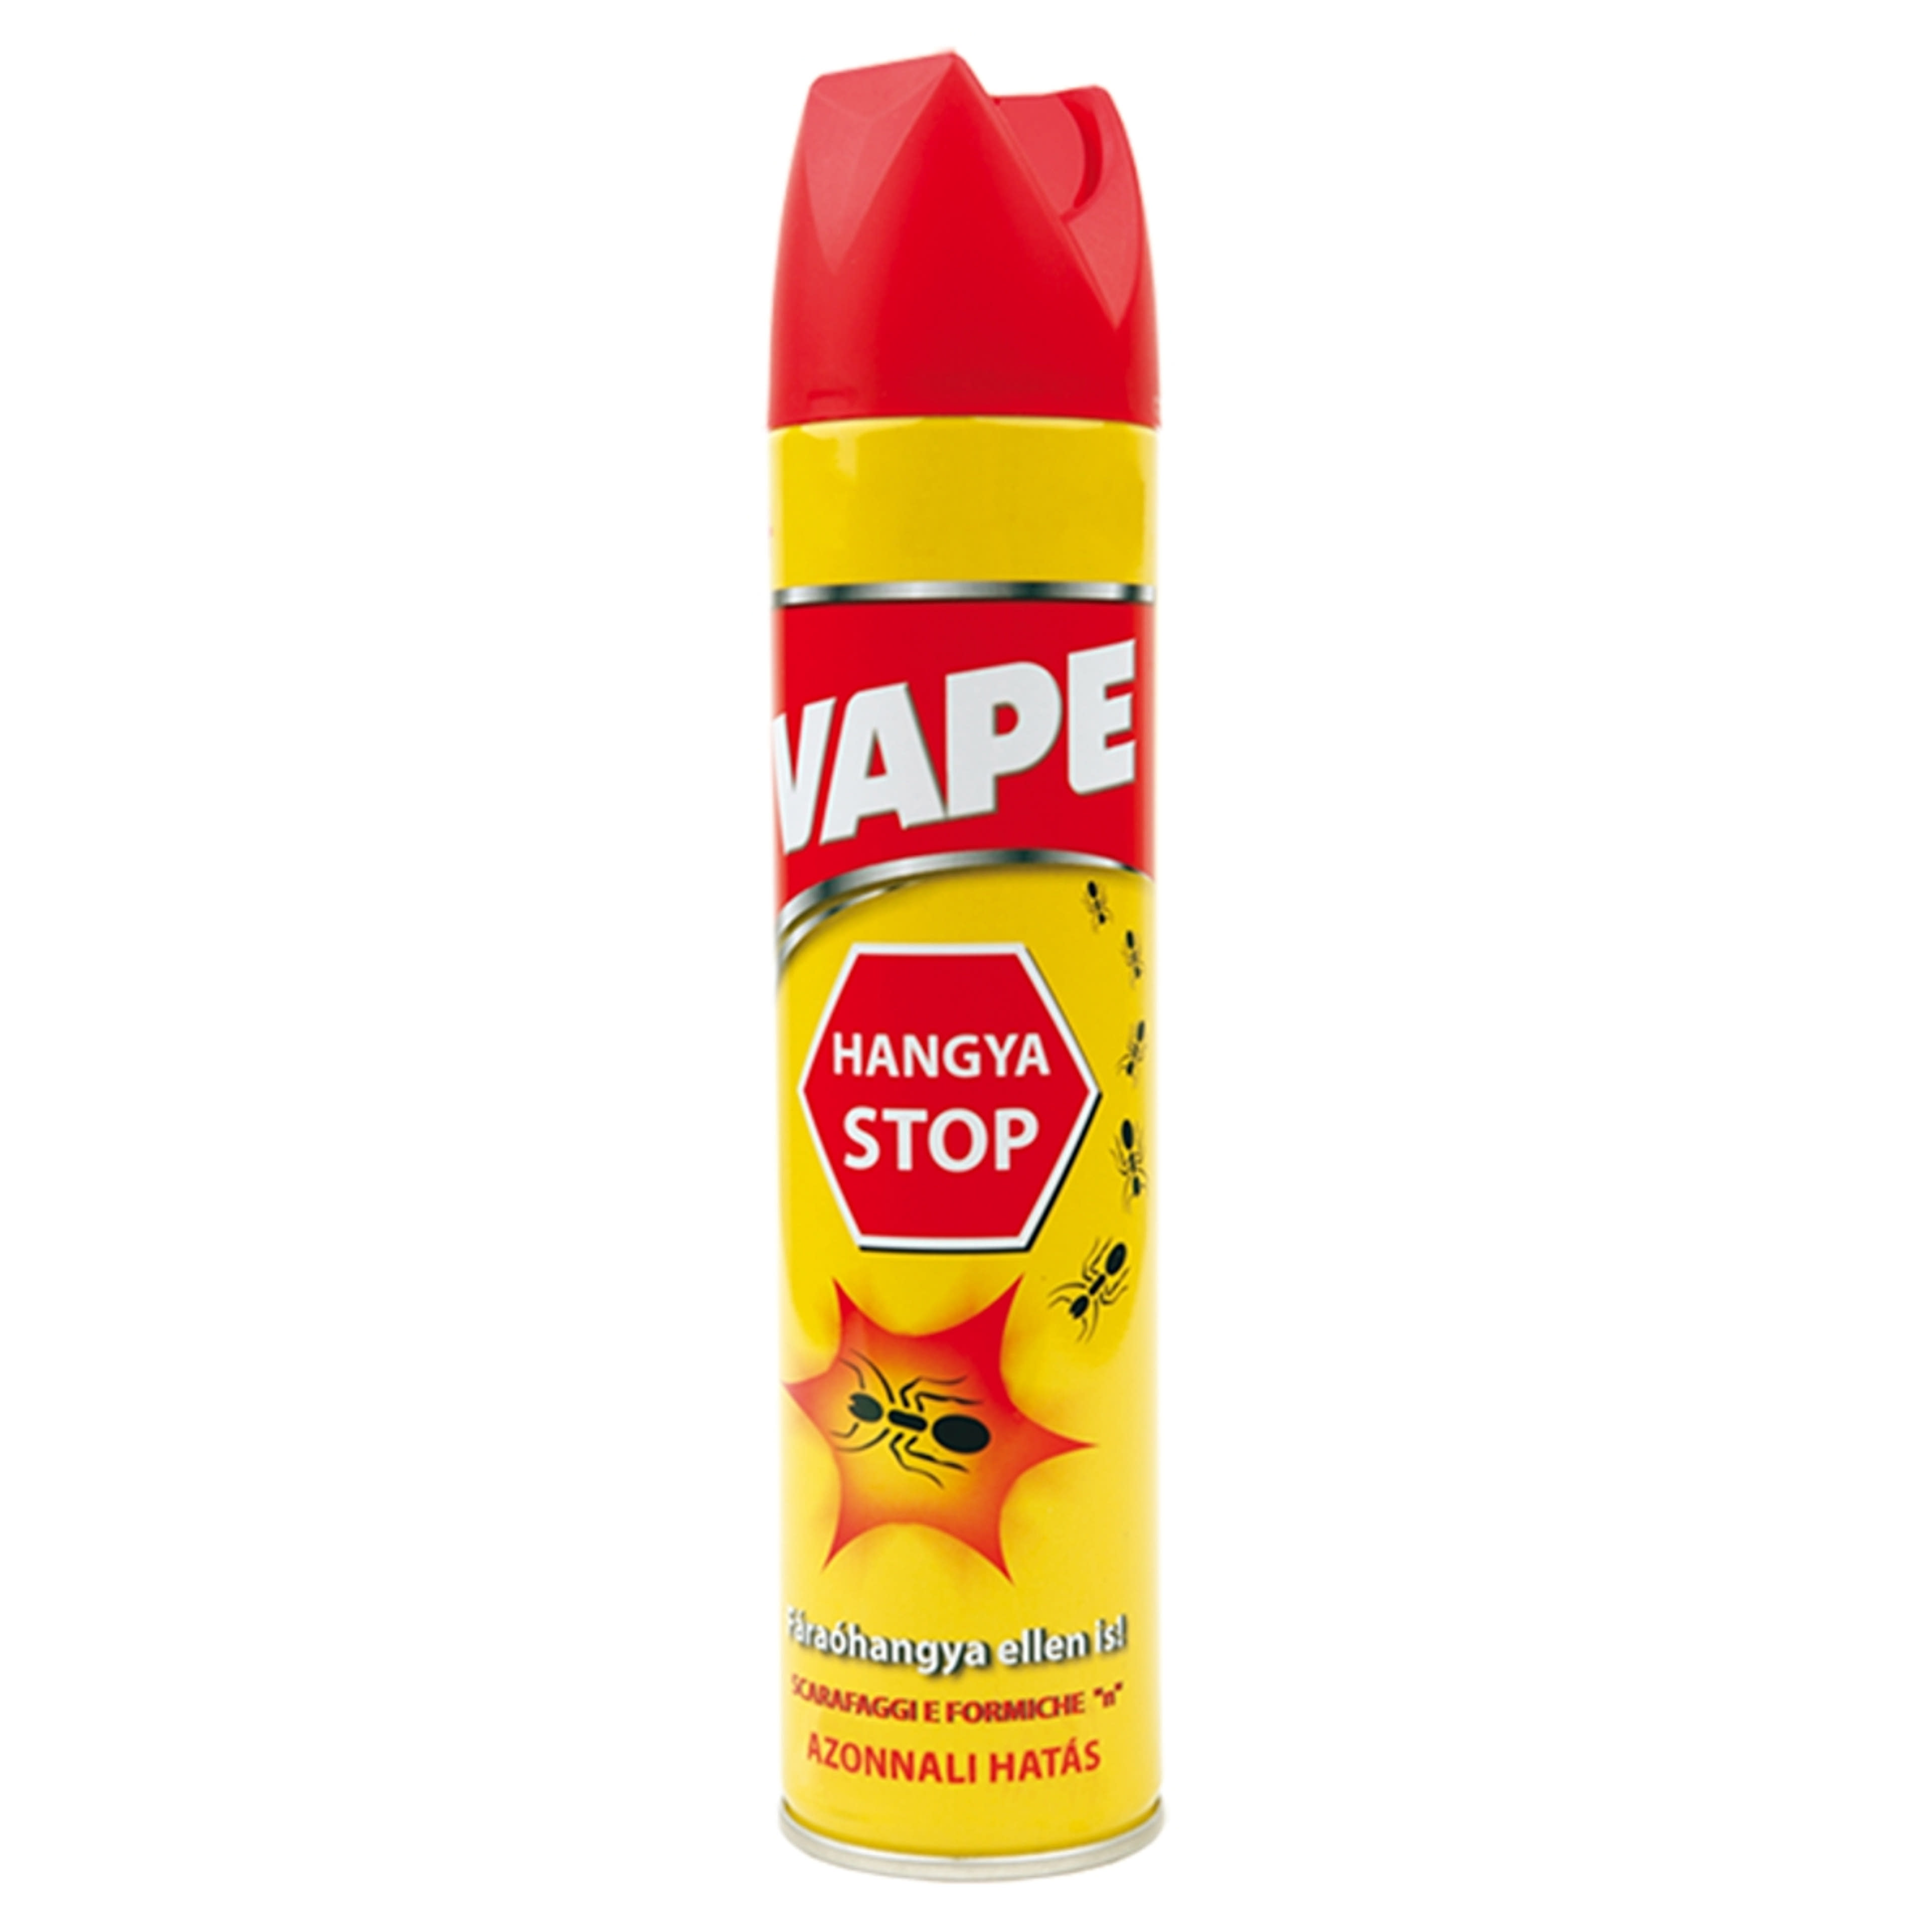 Vape Hangya Stop Spray - 300 ml